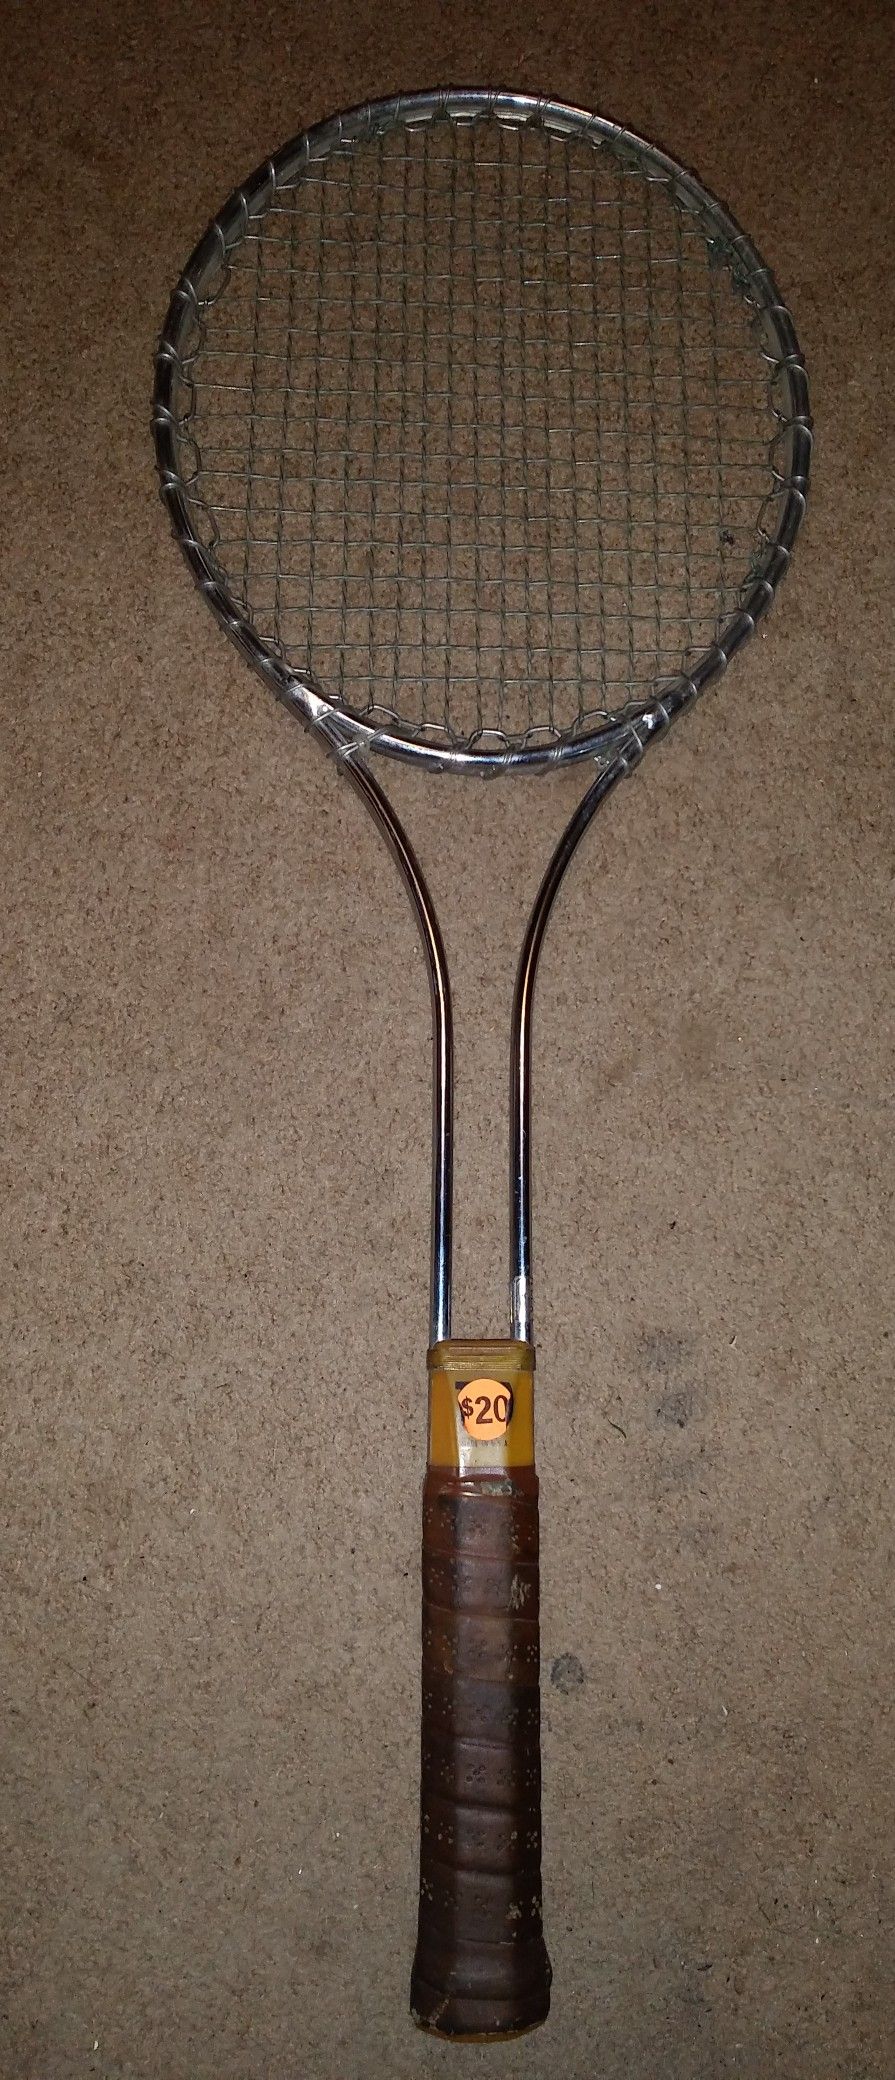 Tennis Racket